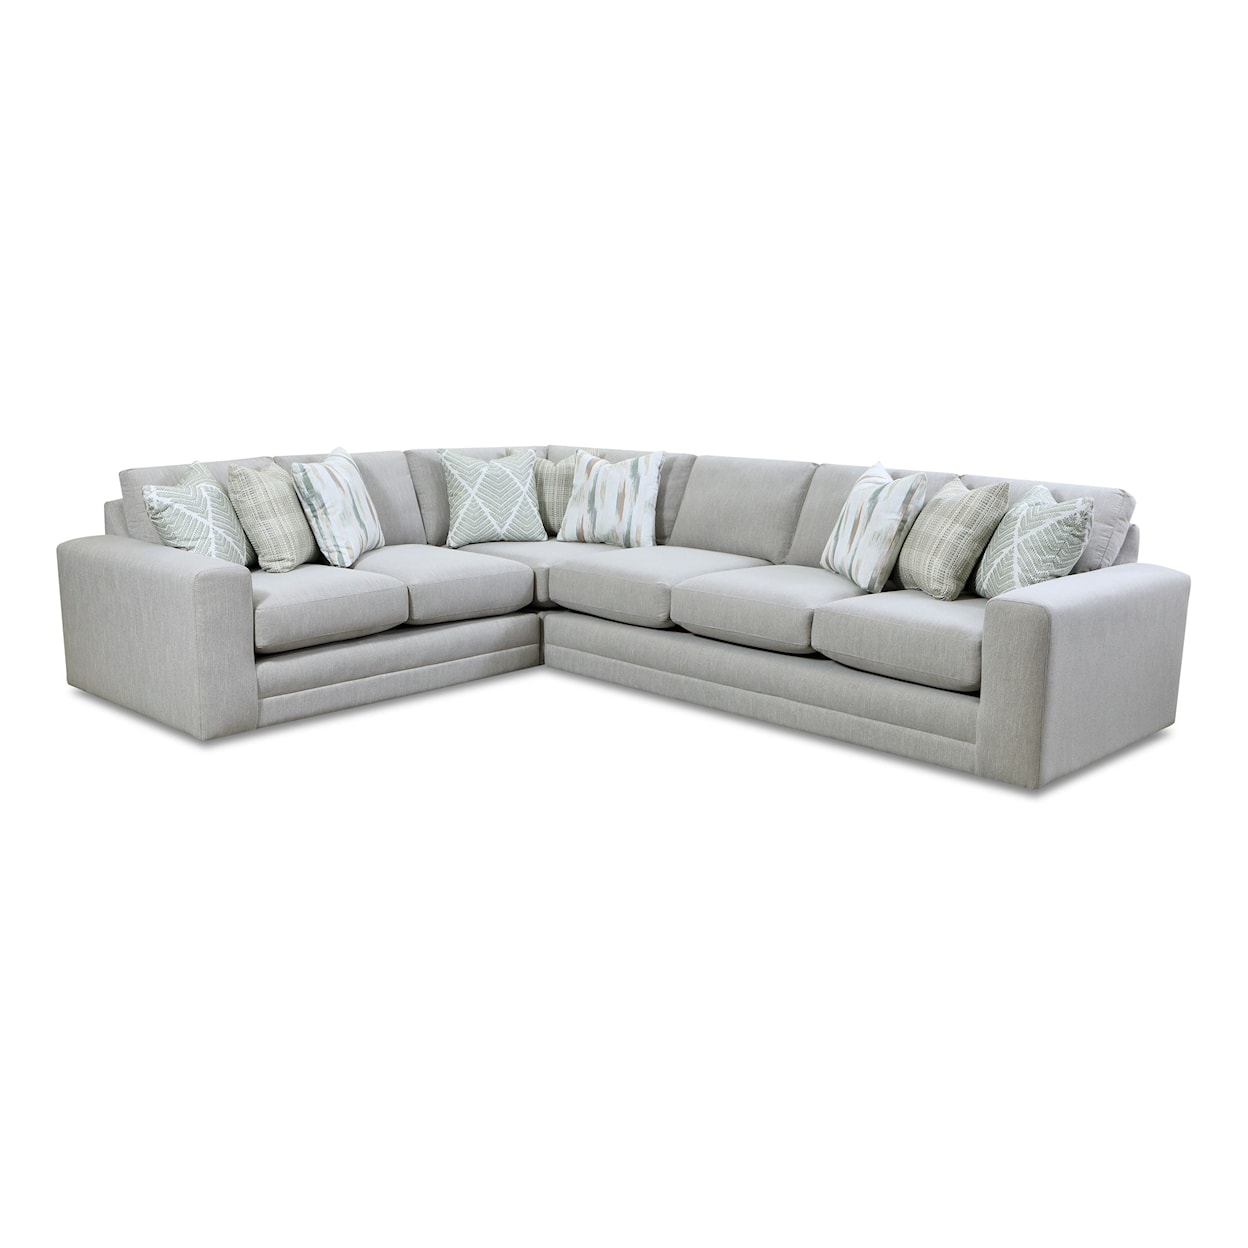 Fusion Furniture 7000 CHARLOTTE CREMINI Sectional Sofas